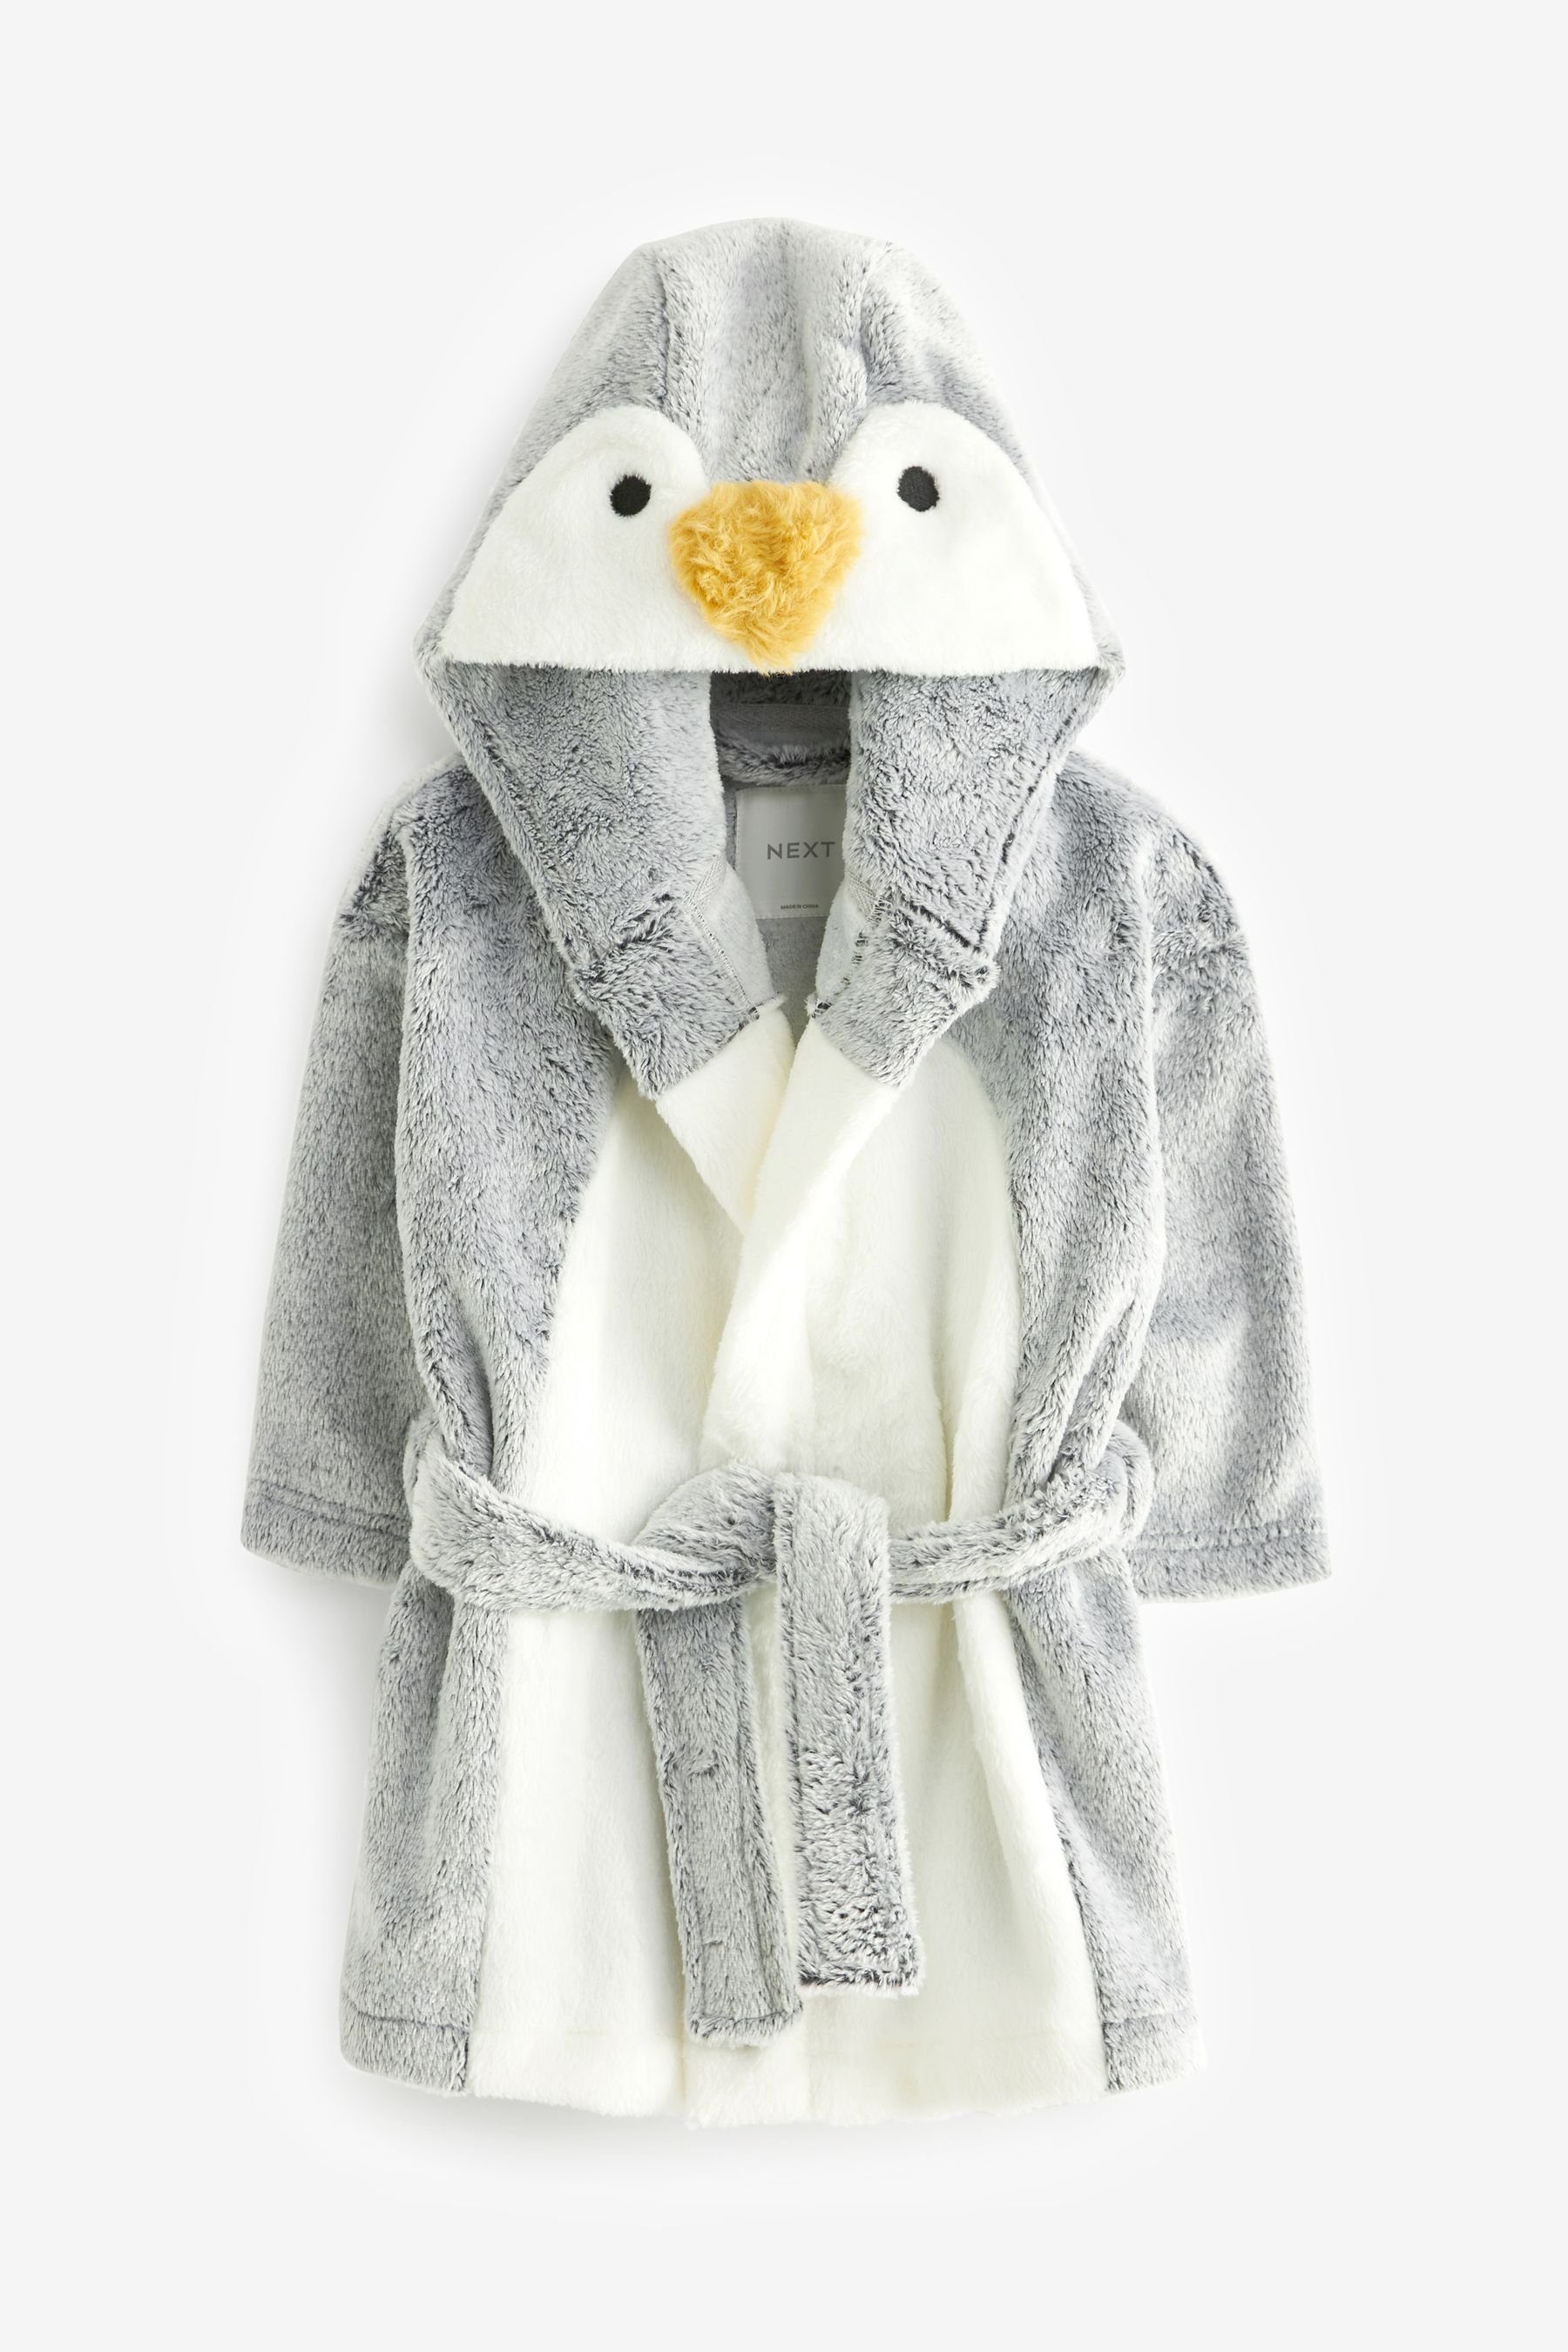 Bademantel Grey Next aus Fleece, Kinderbademantel Polyester Penguin